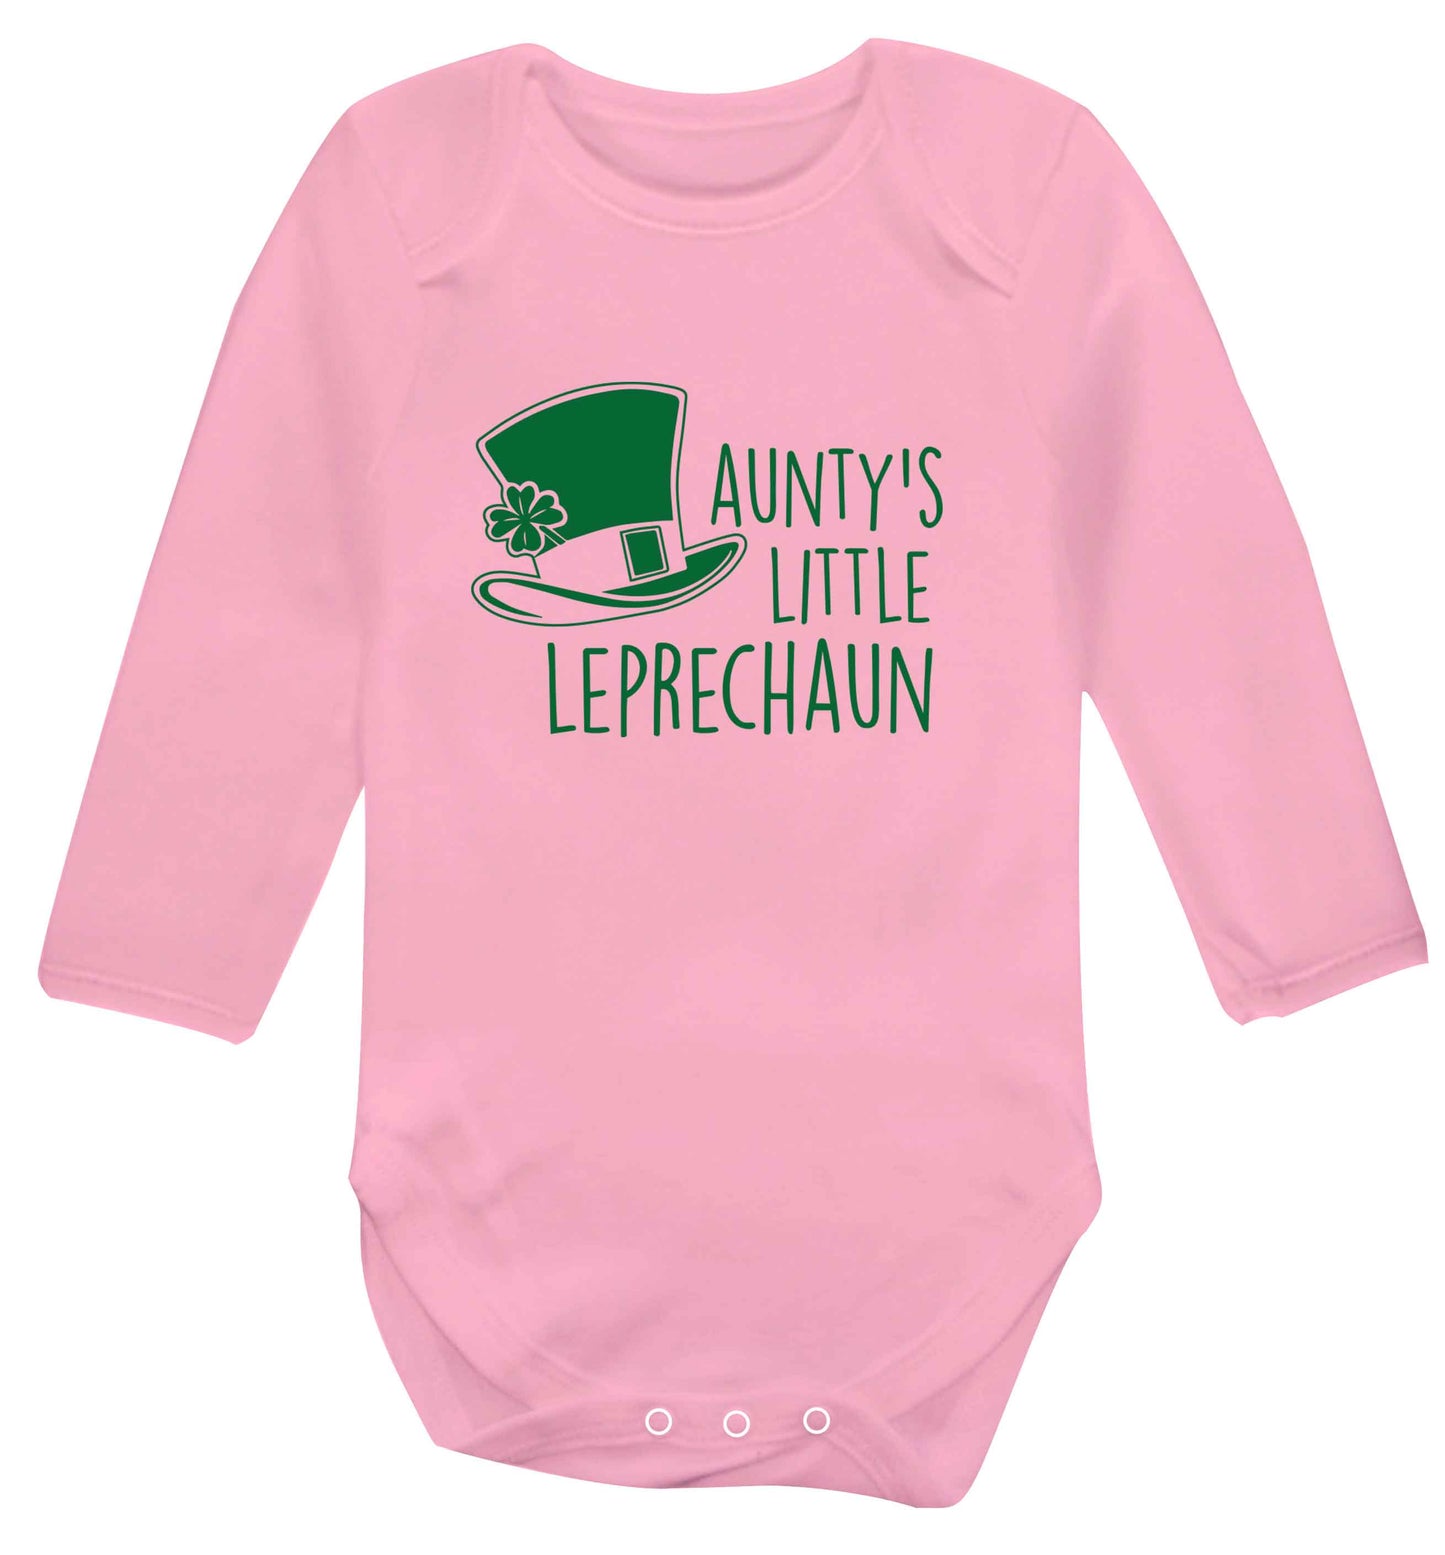 Aunty's little leprechaun baby vest long sleeved pale pink 6-12 months